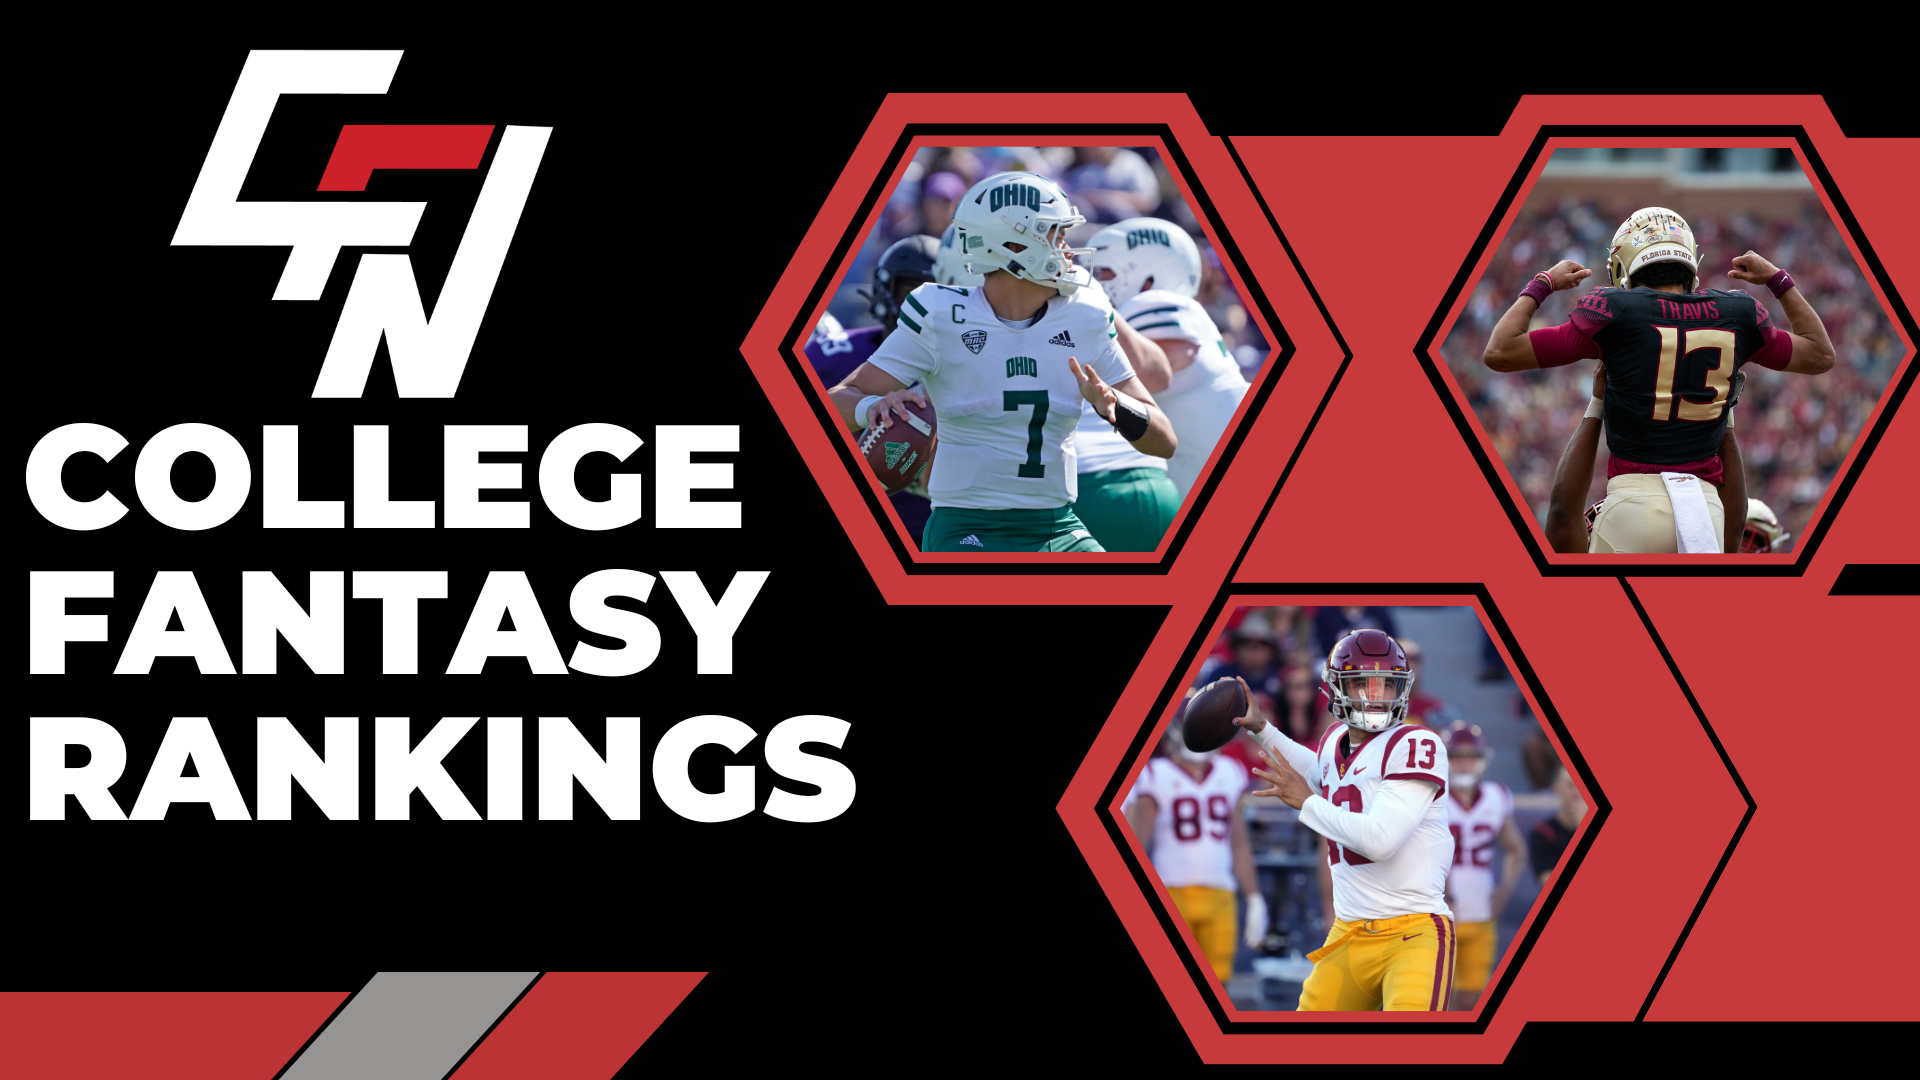 College Fantasy Football Rankings: CFN's Positional Rankings